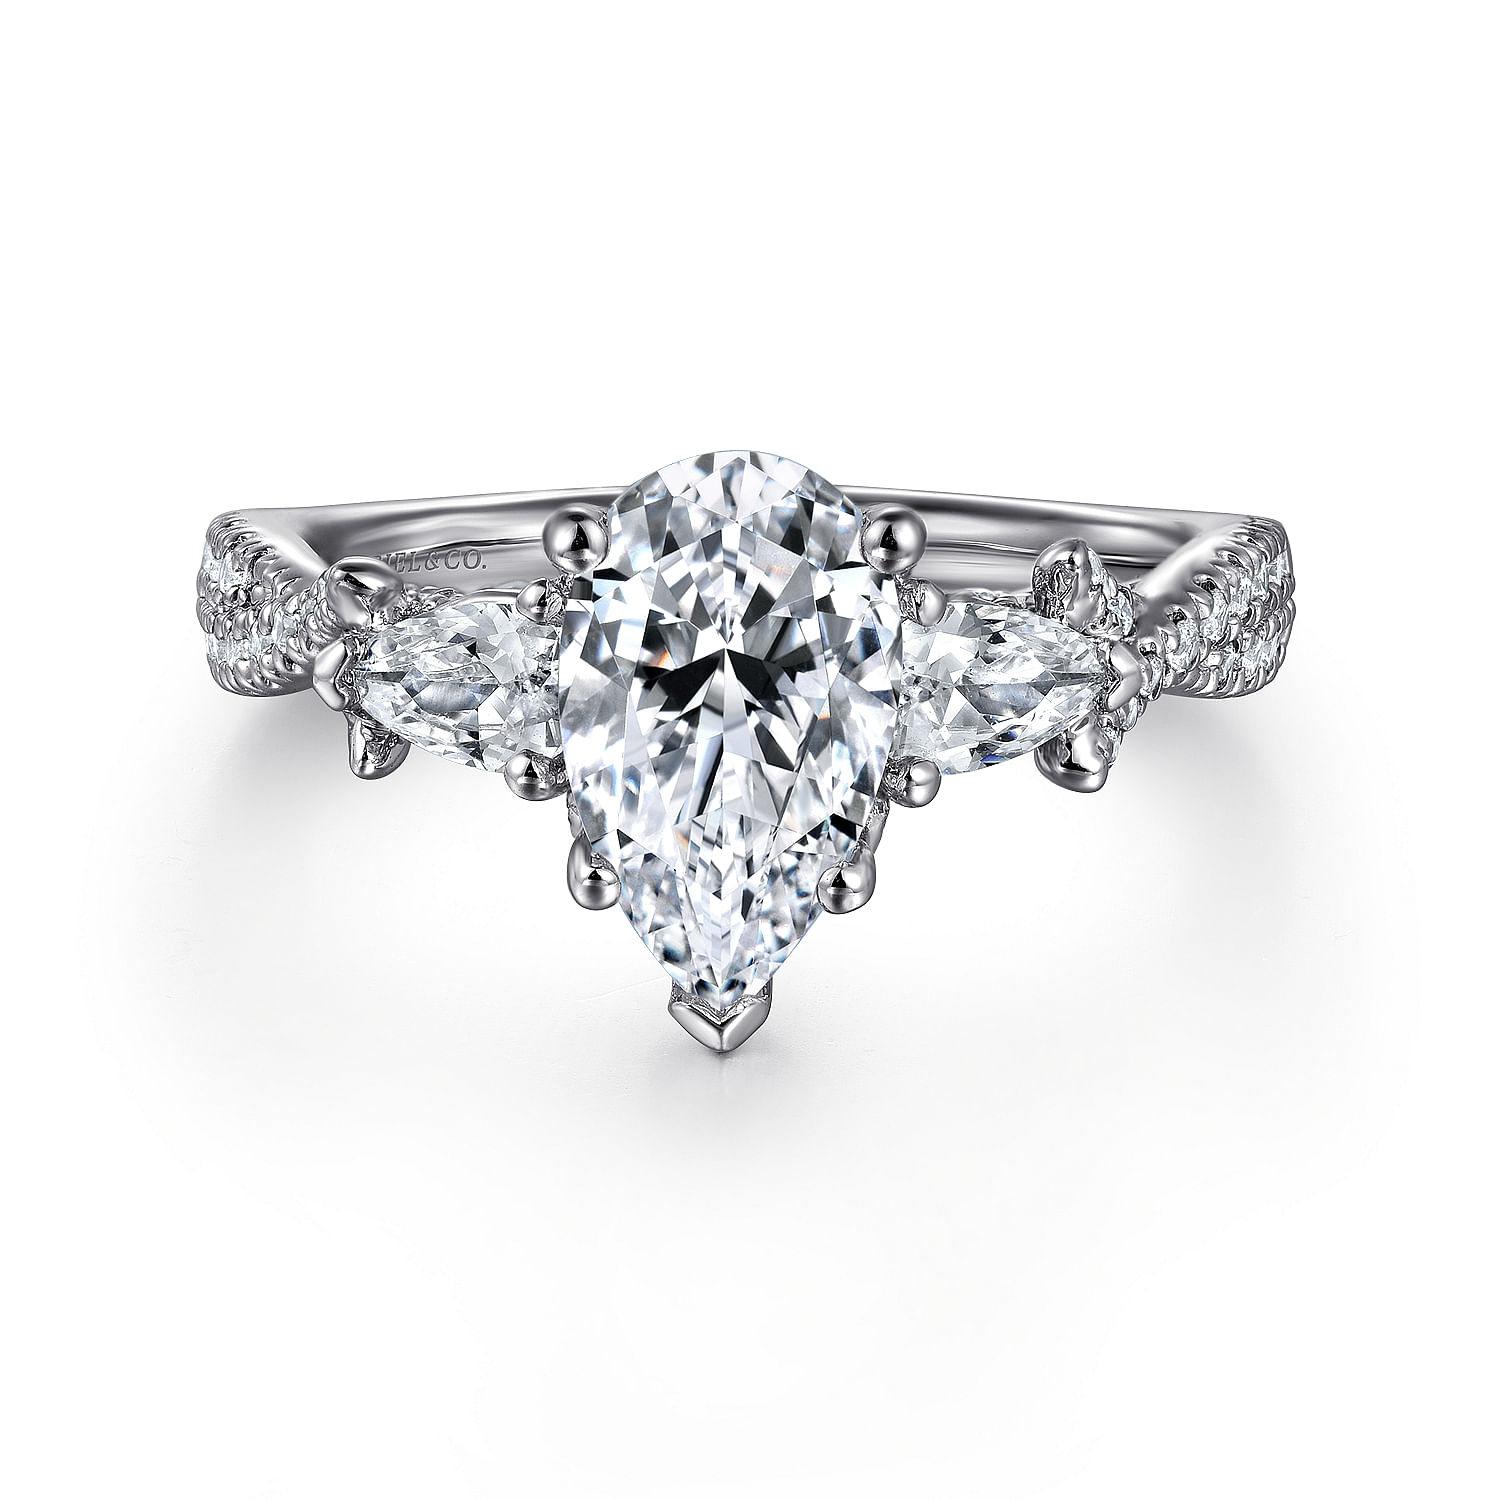 Evalee - 18K White Gold Pear Shape Diamond Engagement Ring